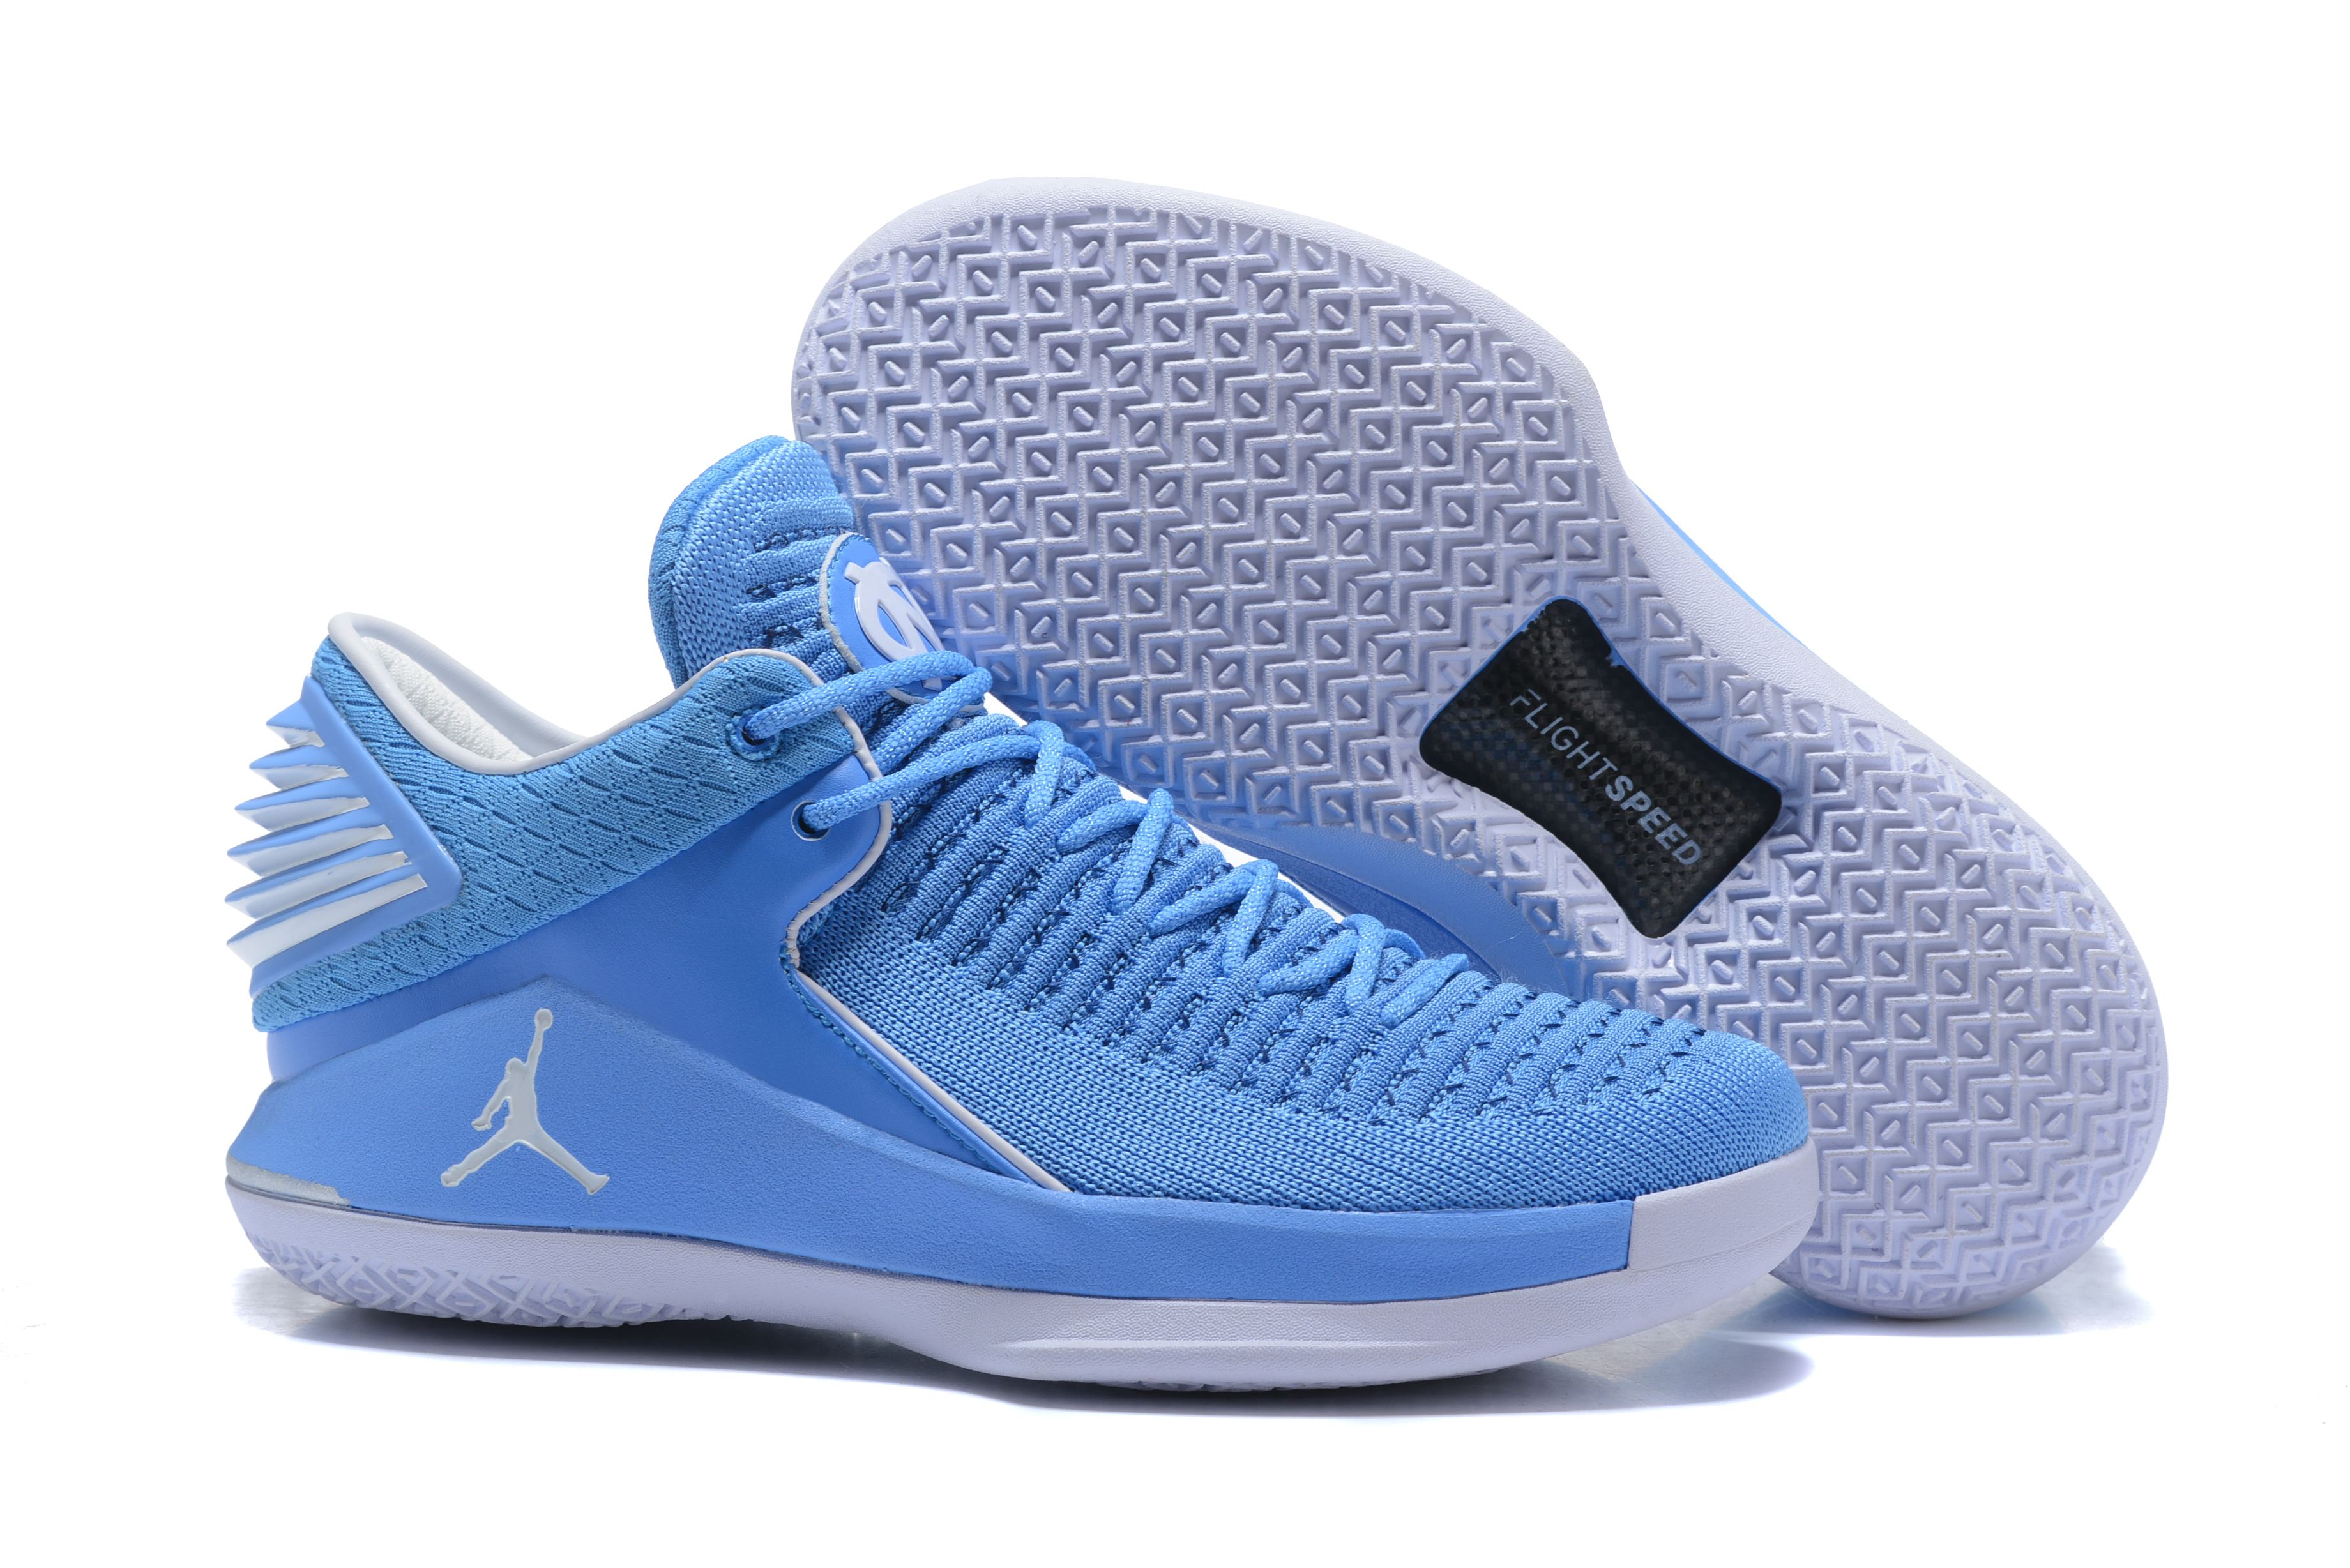 New Air Jordan 32 Low "UNC" University Blue/White Men's Basketball Shoes